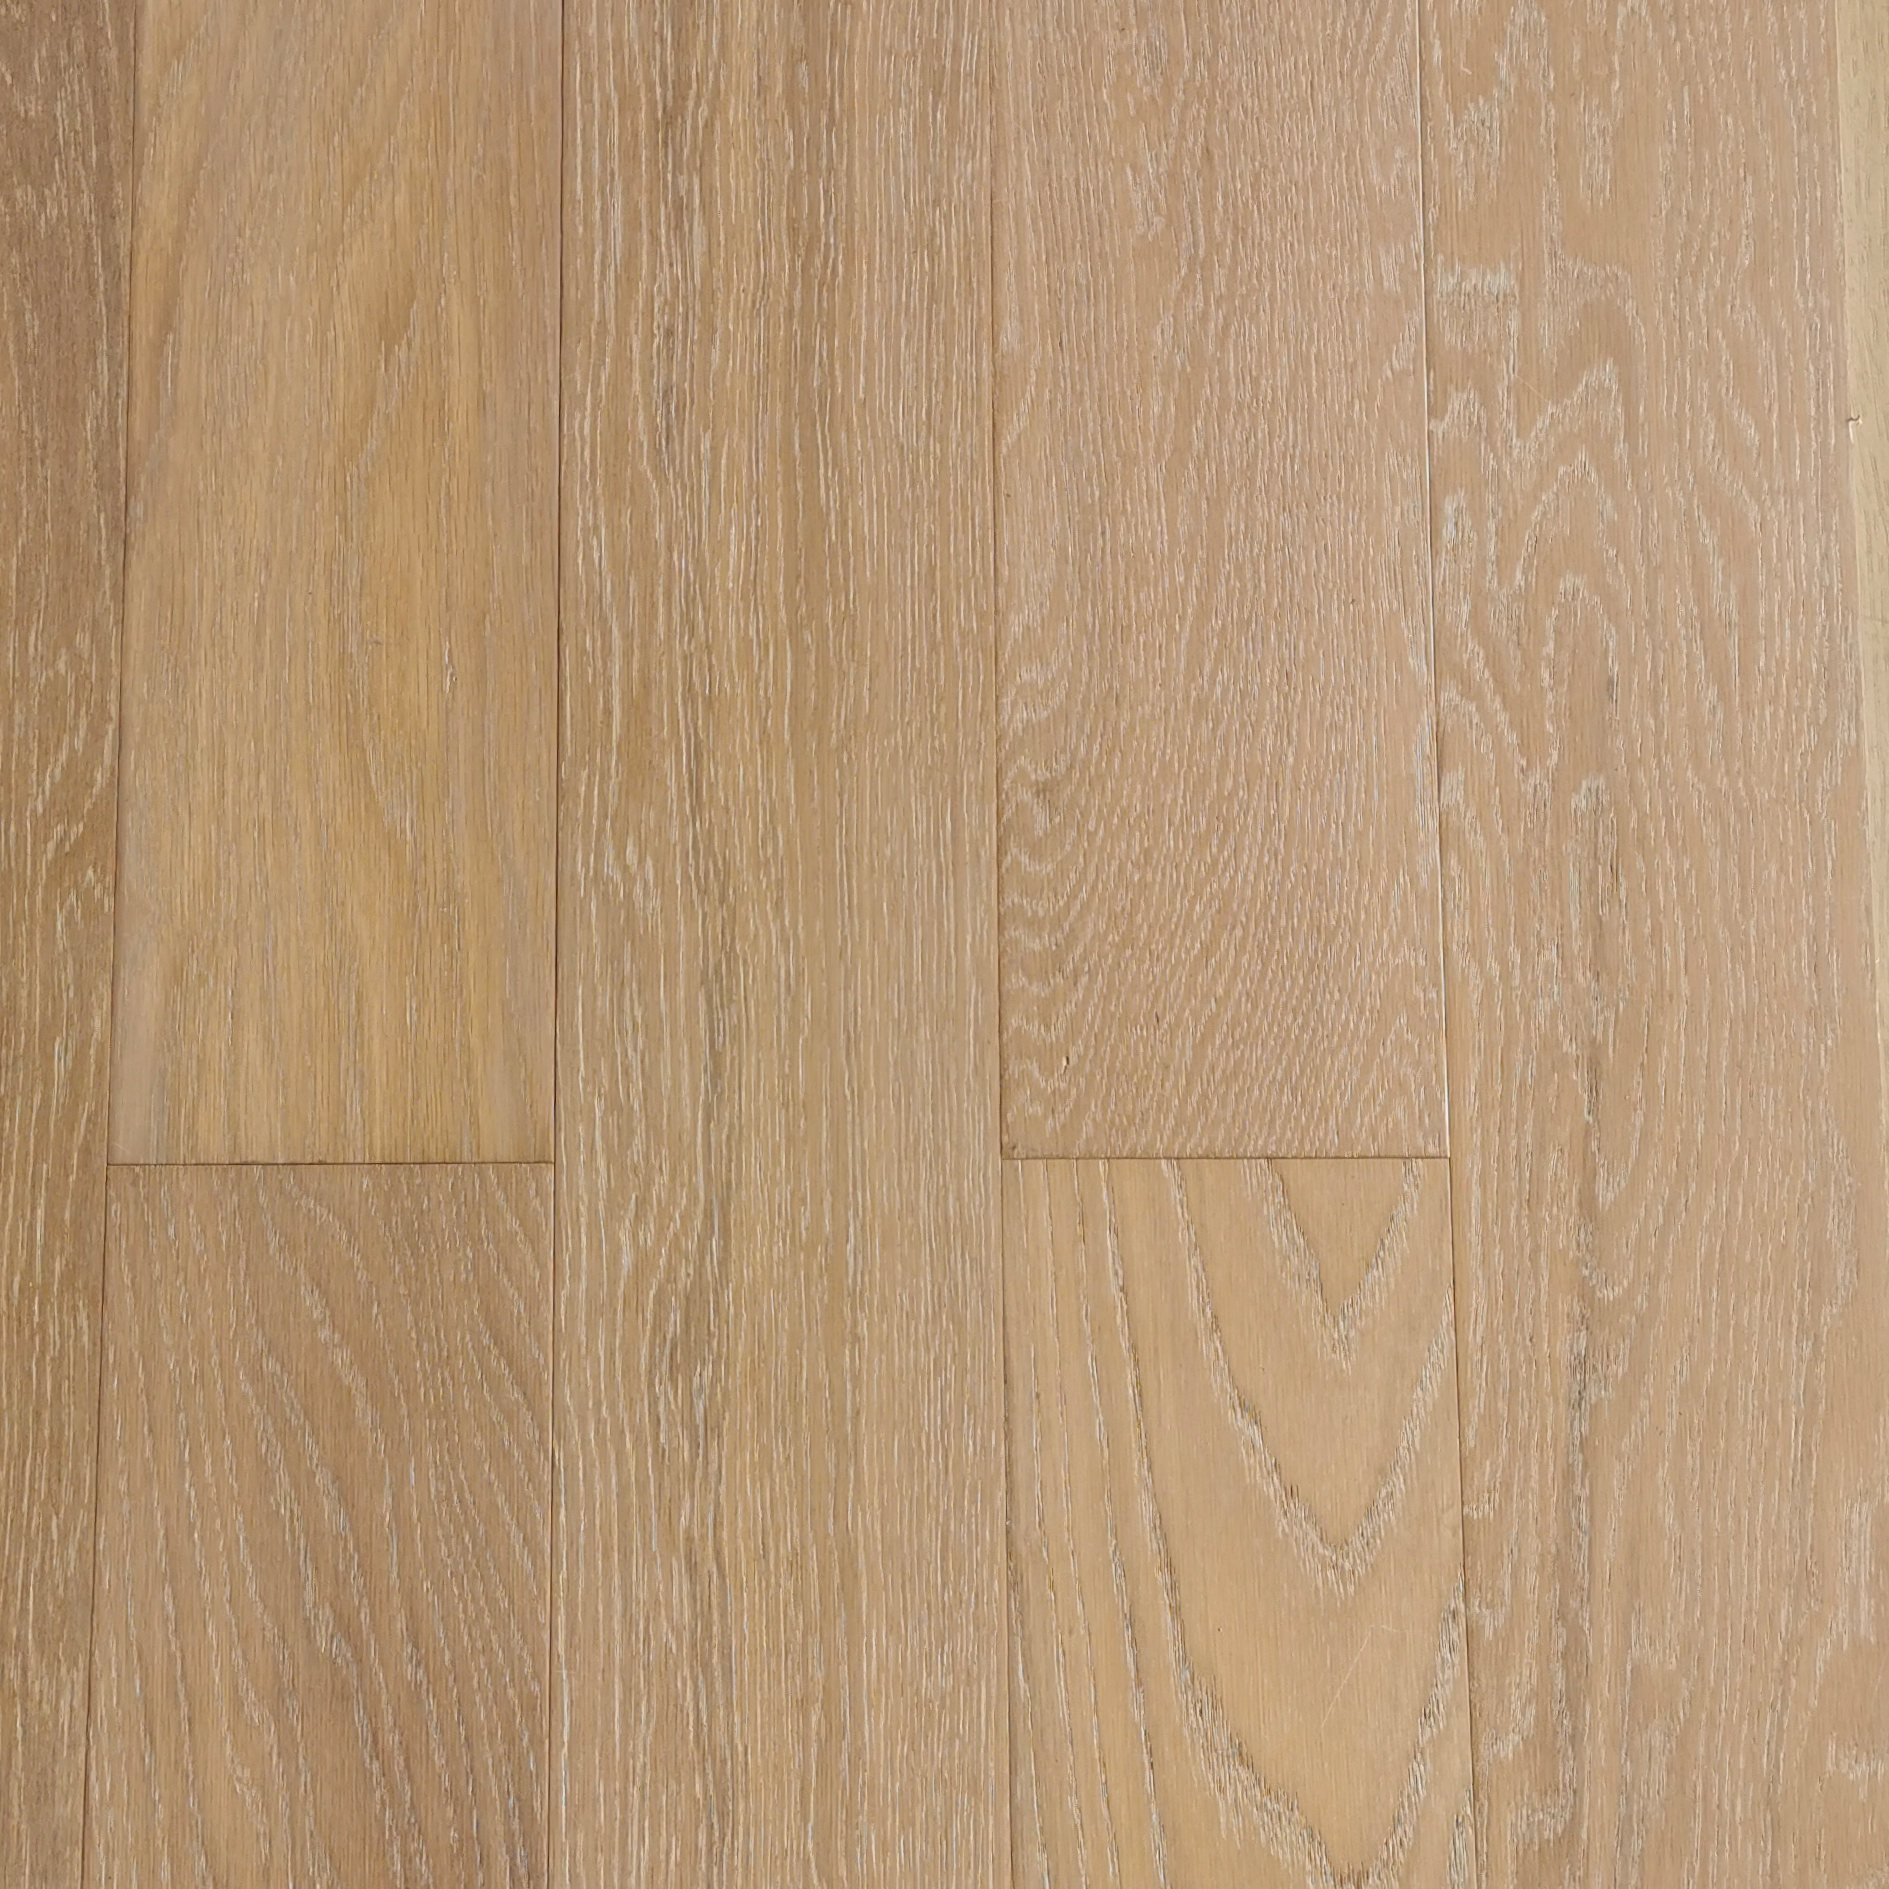 Discount Price Timber Harvest Hardwood Flooring -
  New Environmental of Natural Solid Wood Veneer SPC Flooring – Kangton